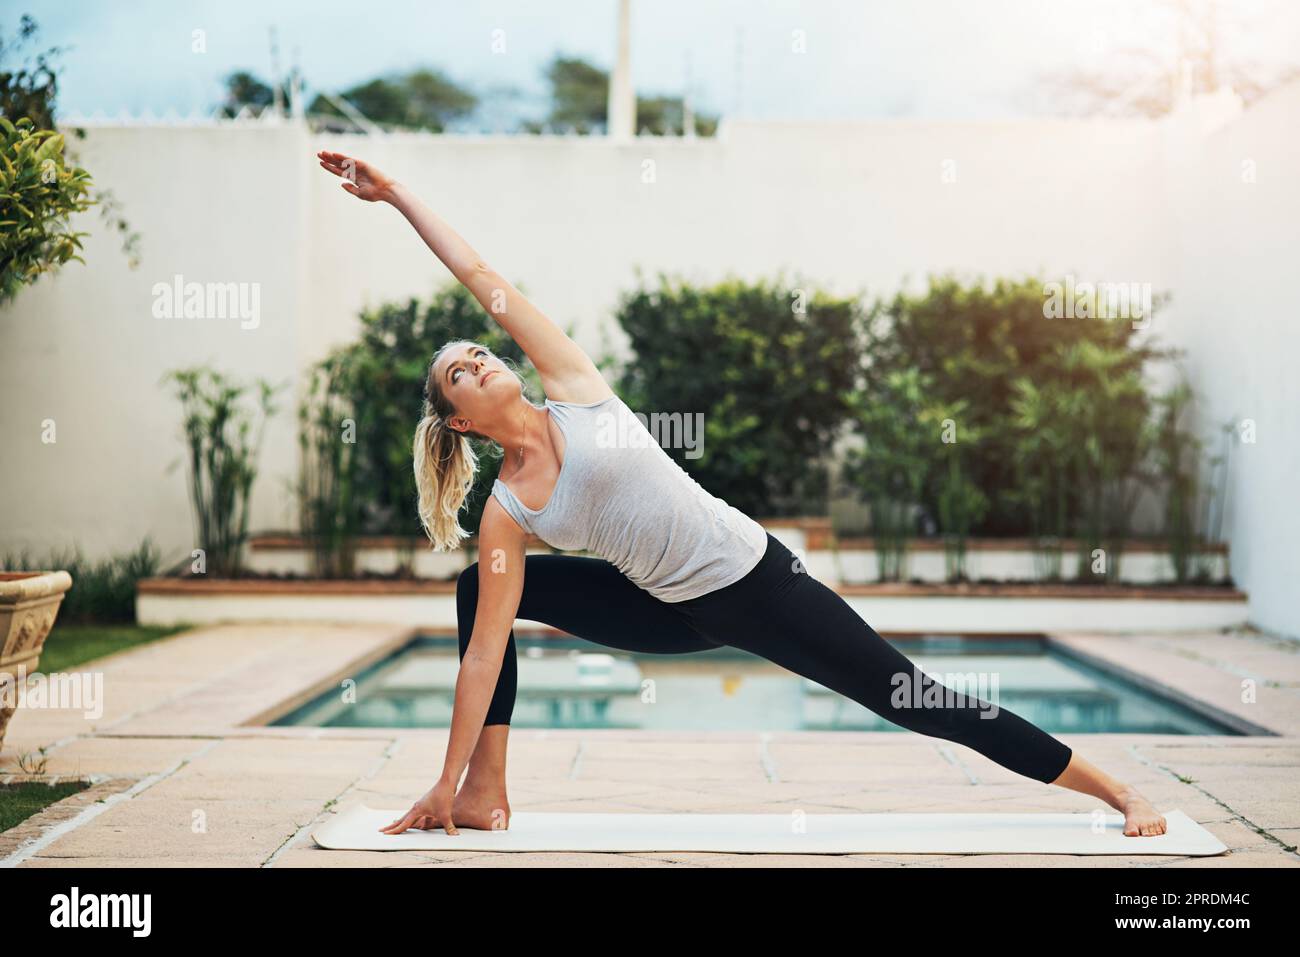 Keep calm and do yoga. a young woman doing yoga poolside. Stock Photo